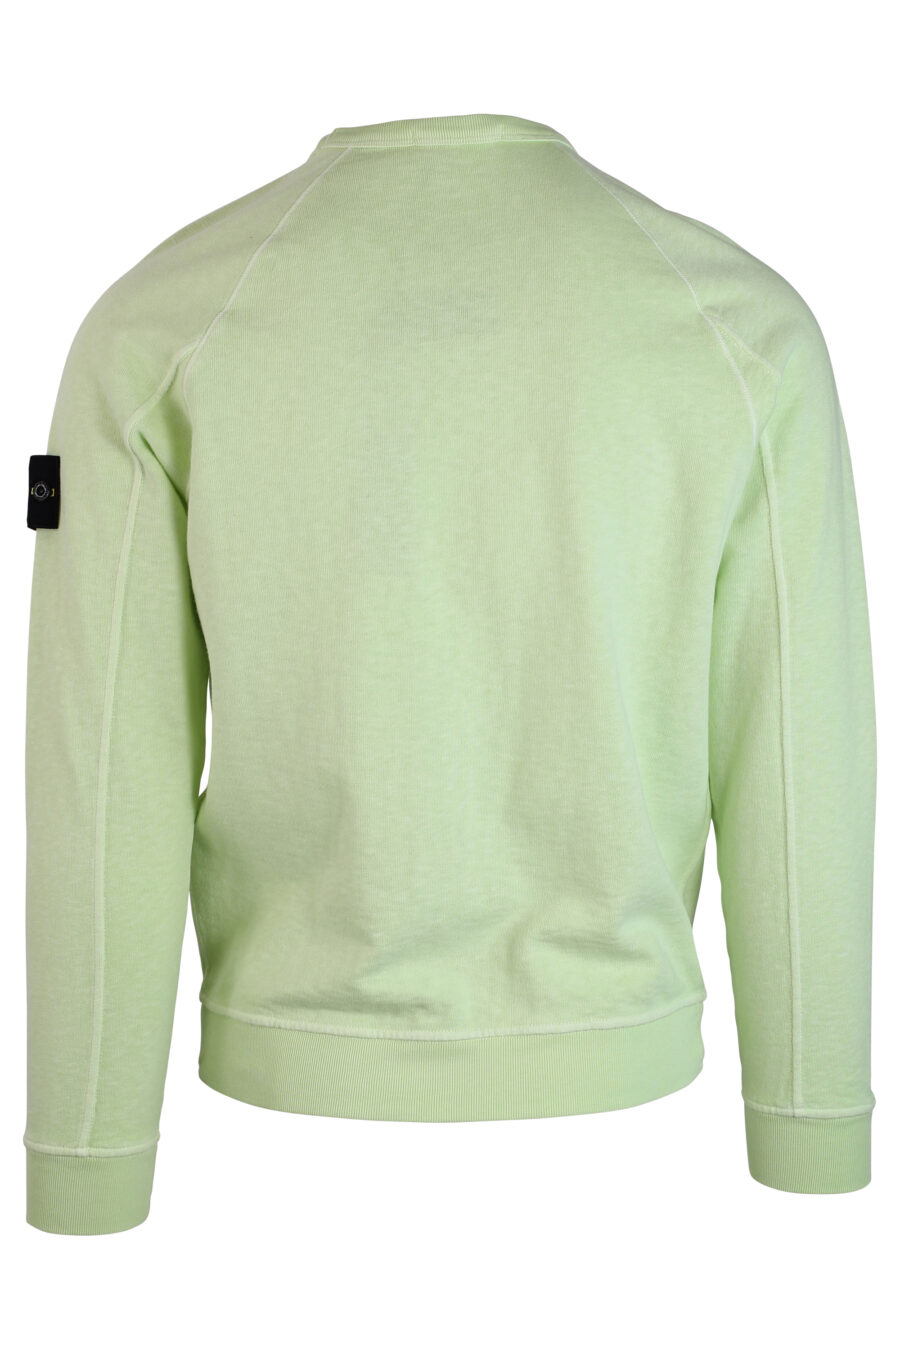 Camisola verde clara com remendo - IMG 0274